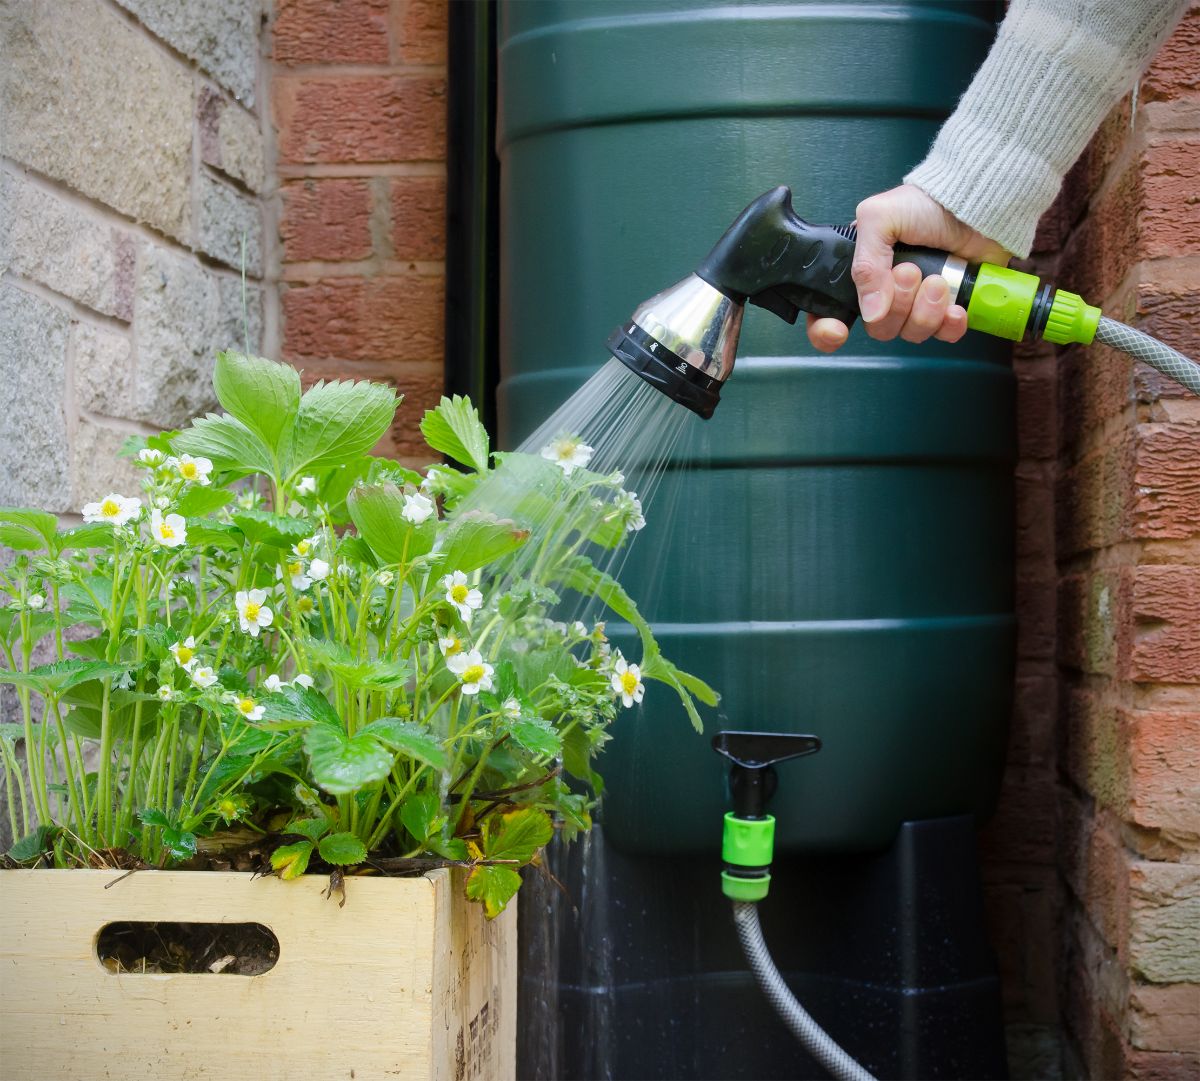 A rain barrel capturing a natural resource for garden watering.